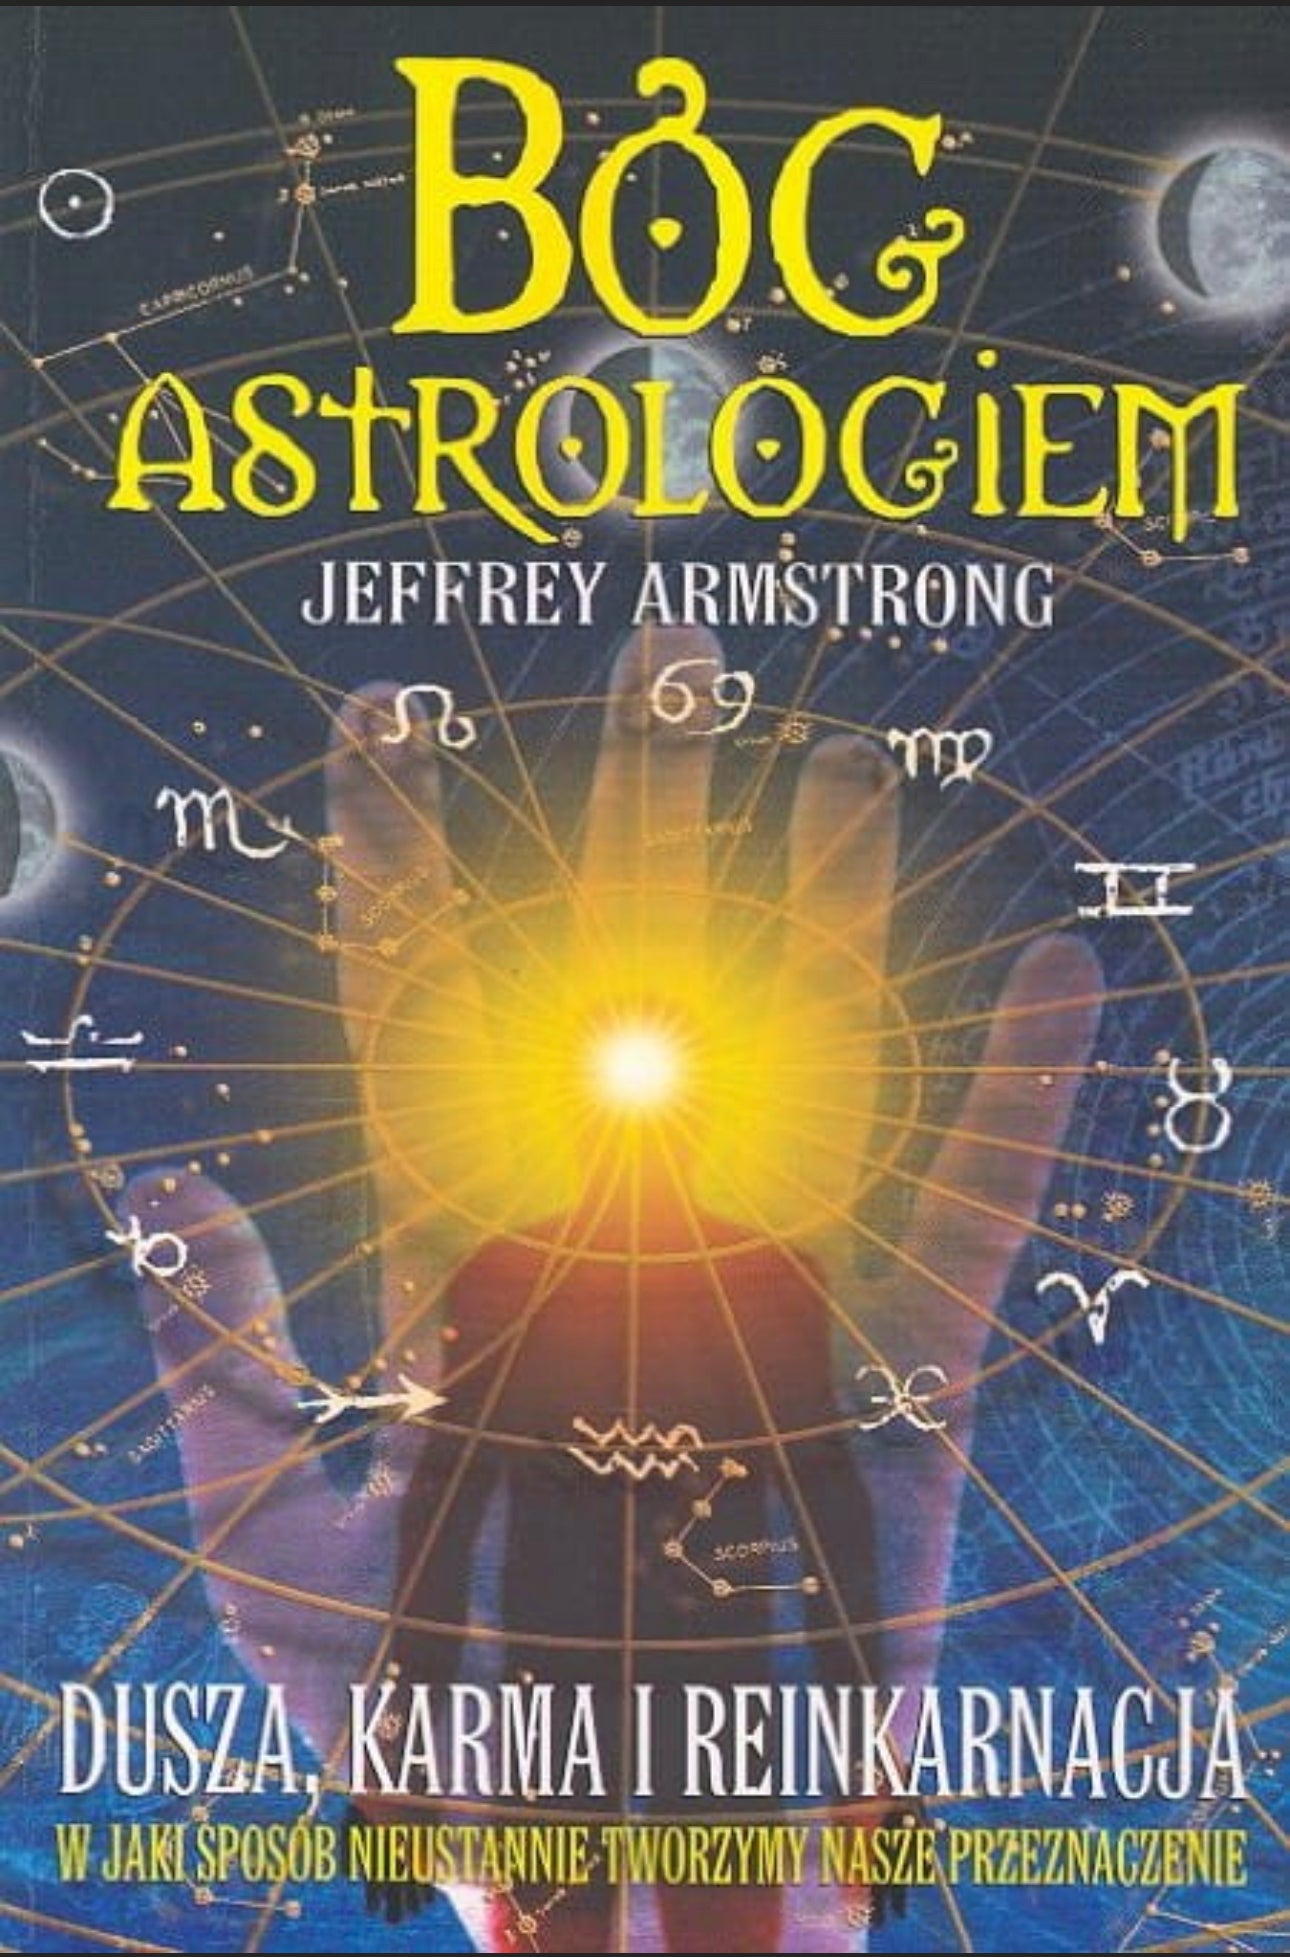 Bóg astrologiem - JEFFREY ARMSTRONG